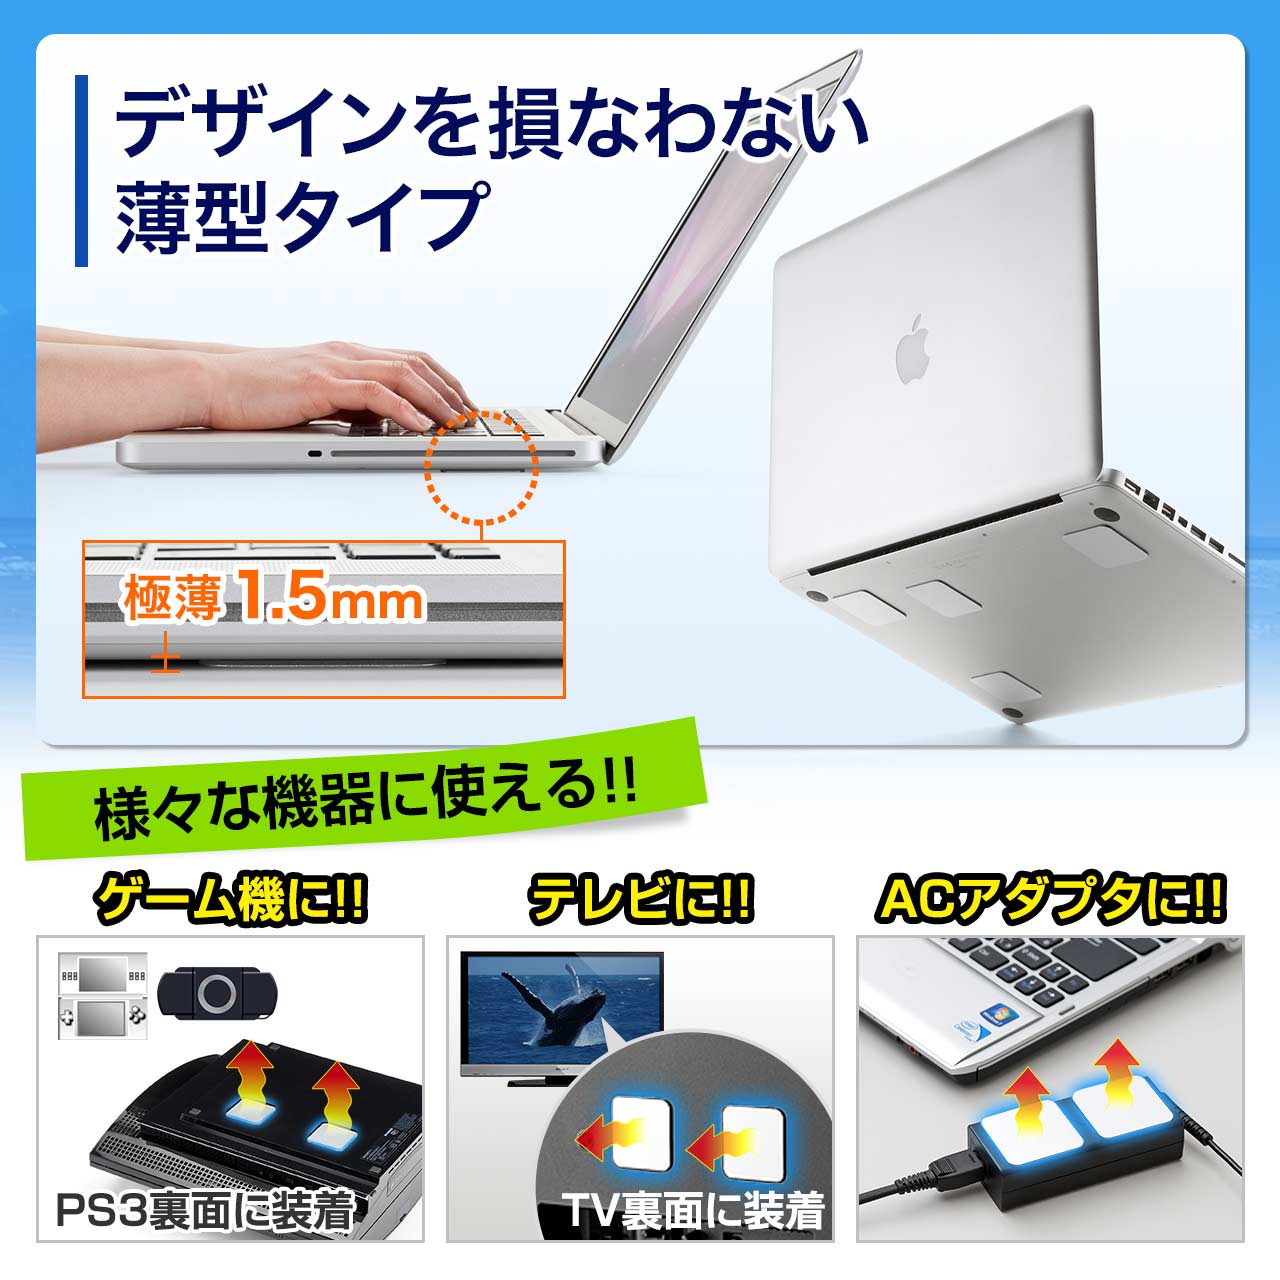 ppbh  4g 43mm p^ iPad ^ubgPCΉ Vo[ m[gp\R MacBook Q[@ switch er ACA_v^ X}zMǑ΍ObY ASSA-7-2